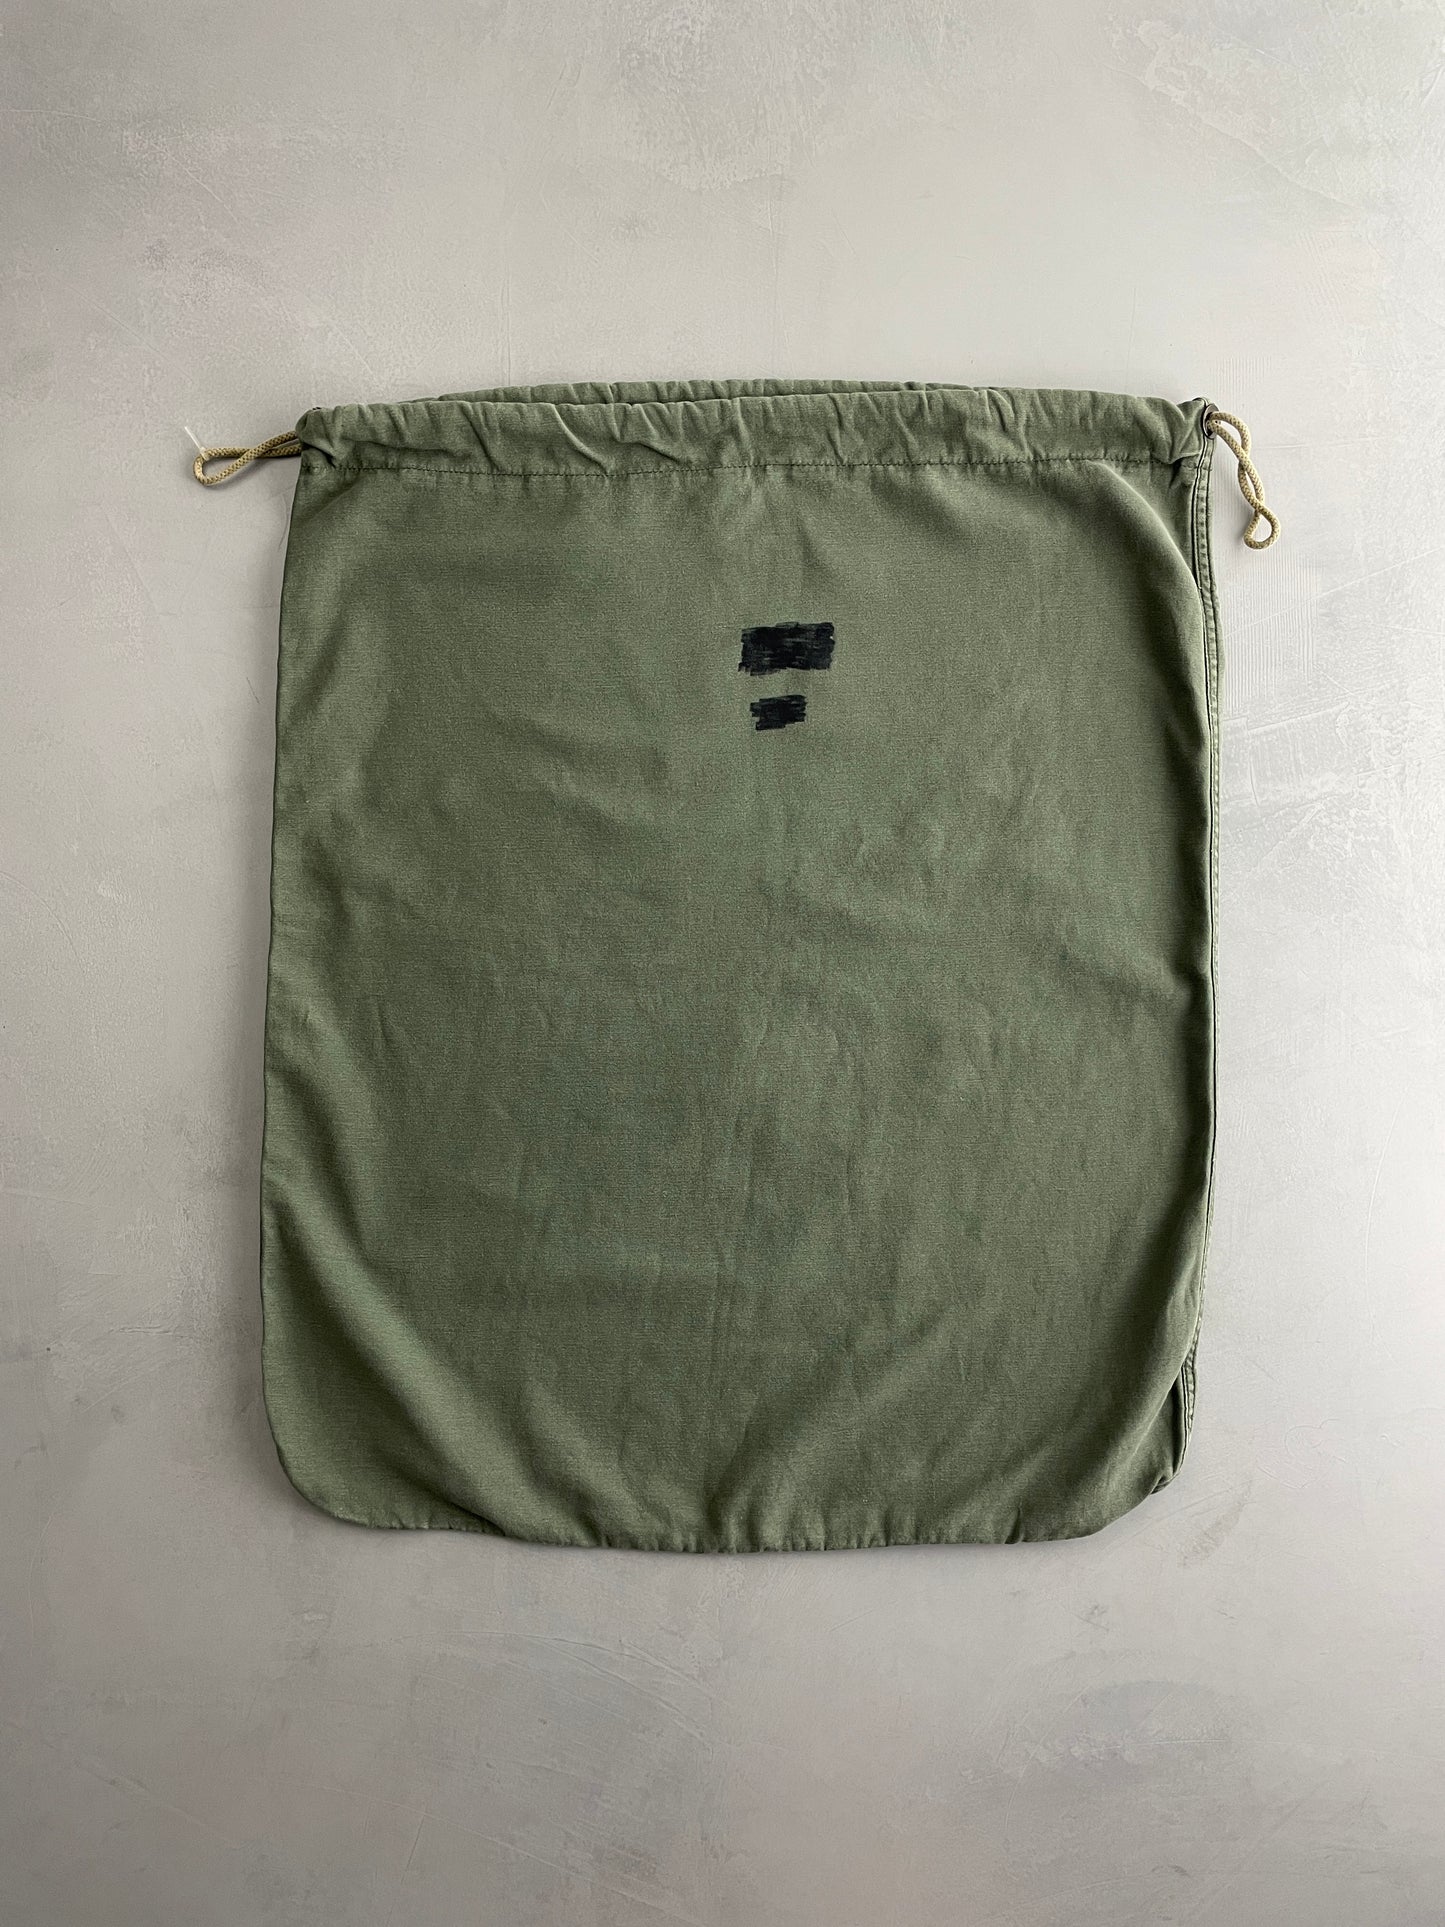 U.S.M.C. Laundry Bag